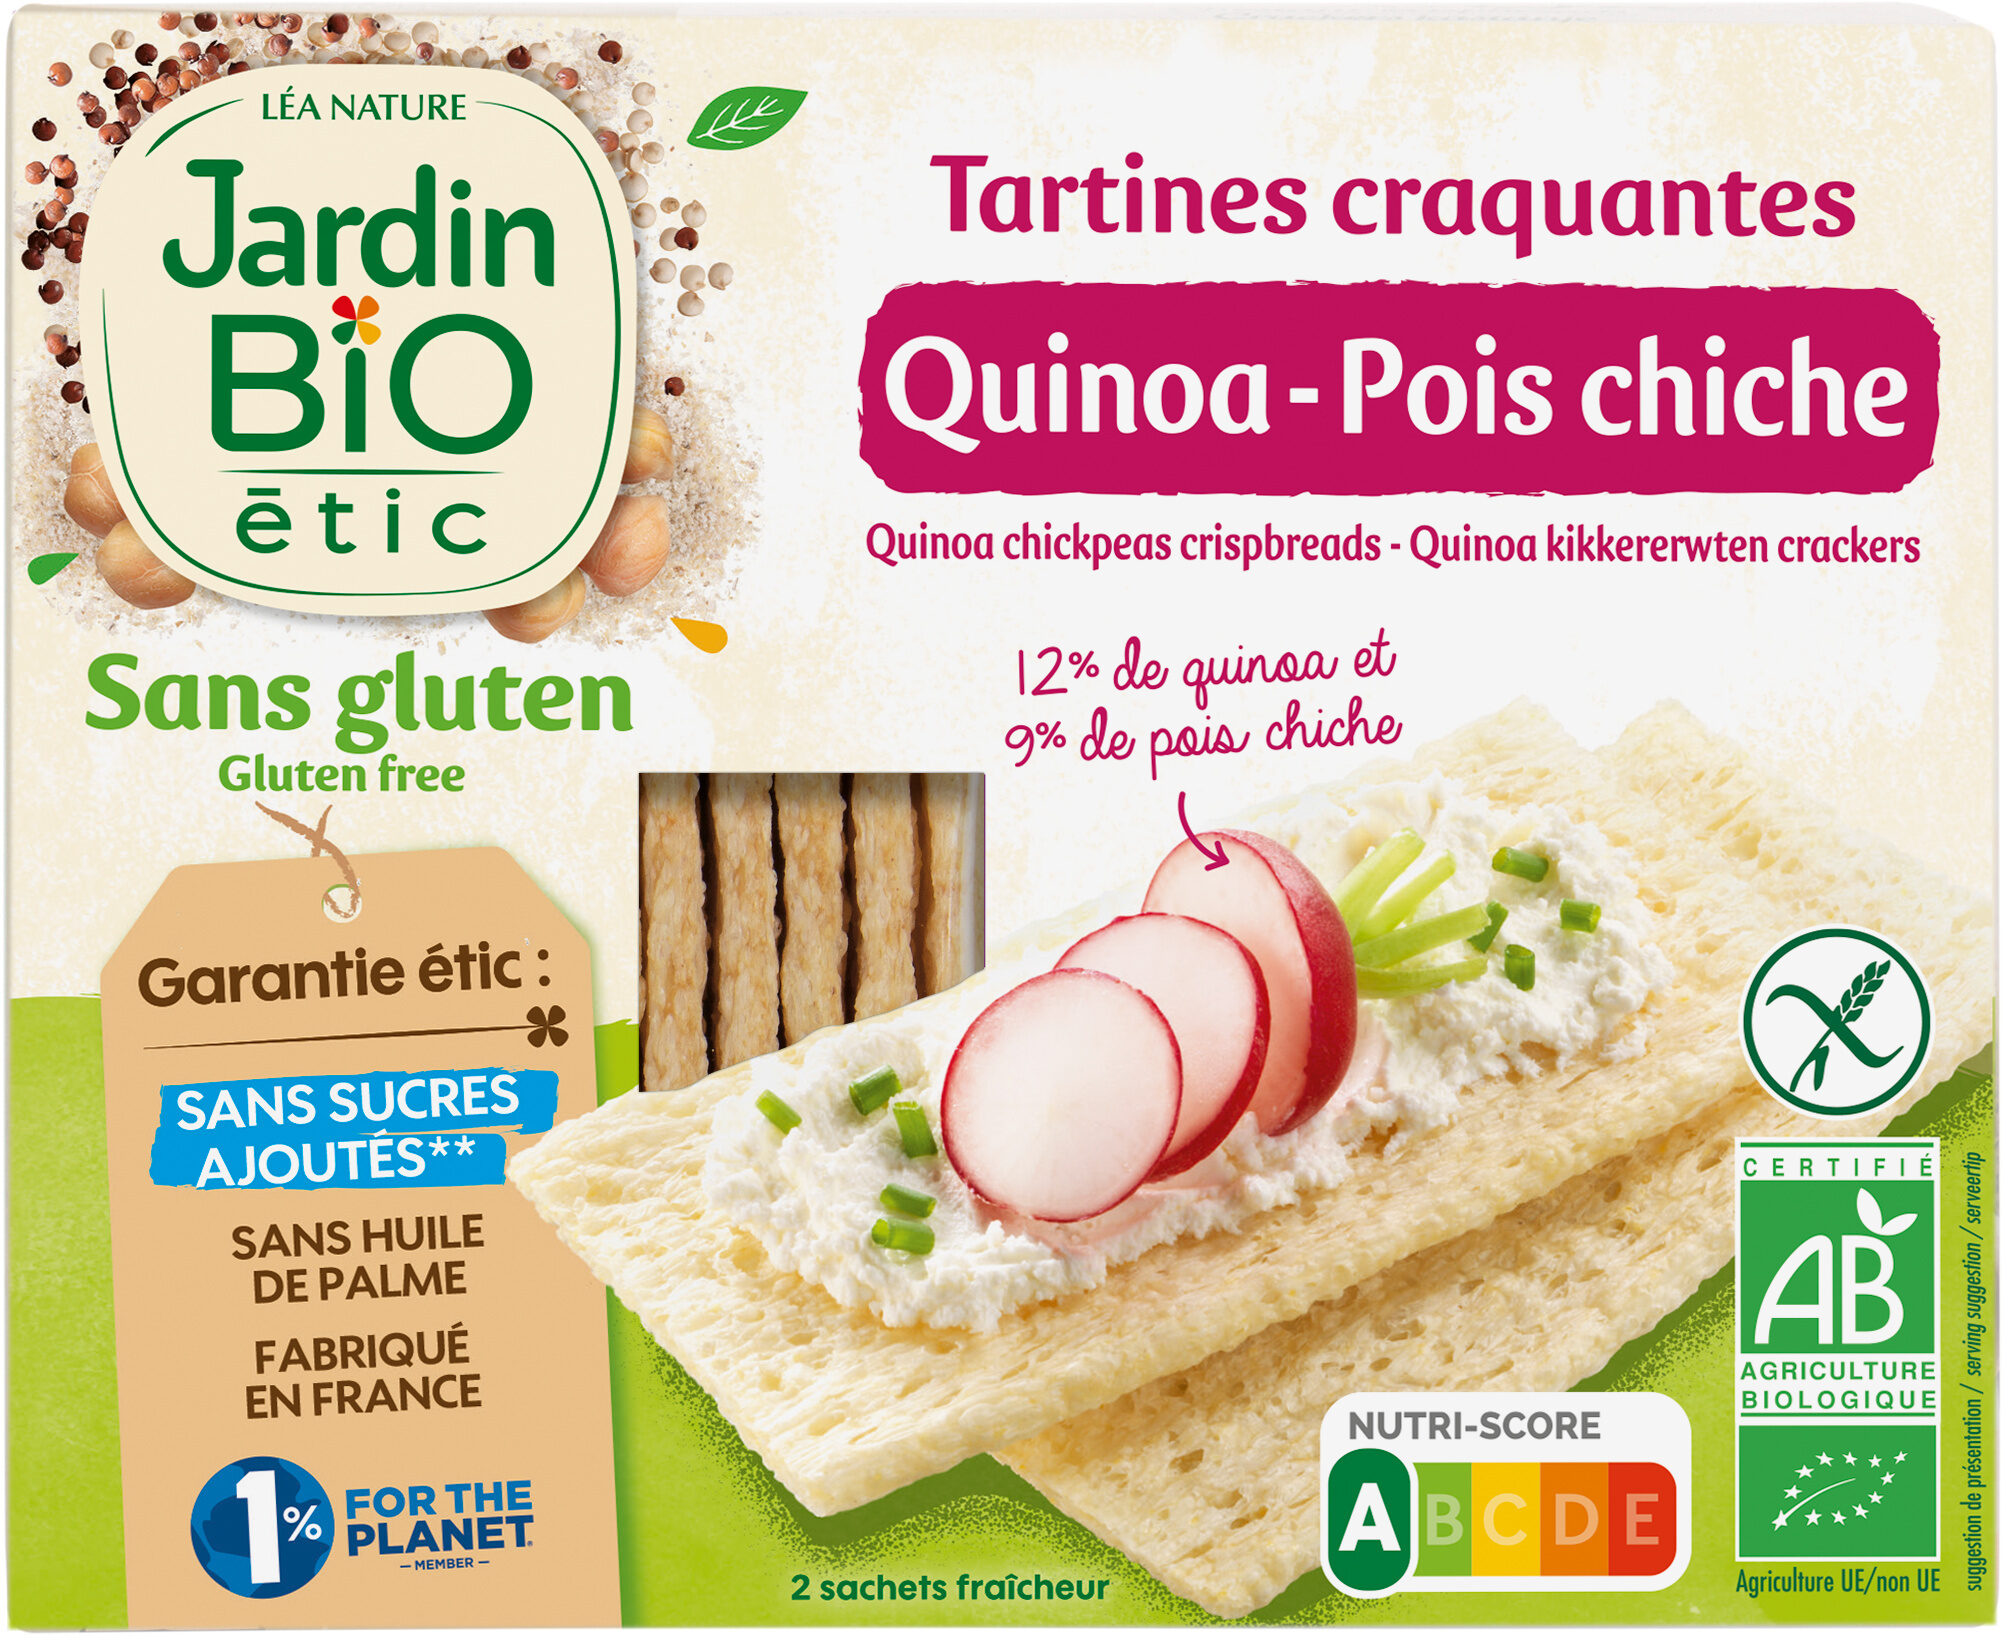 Tartines craquantes quinoa pois chiche - Product - fr